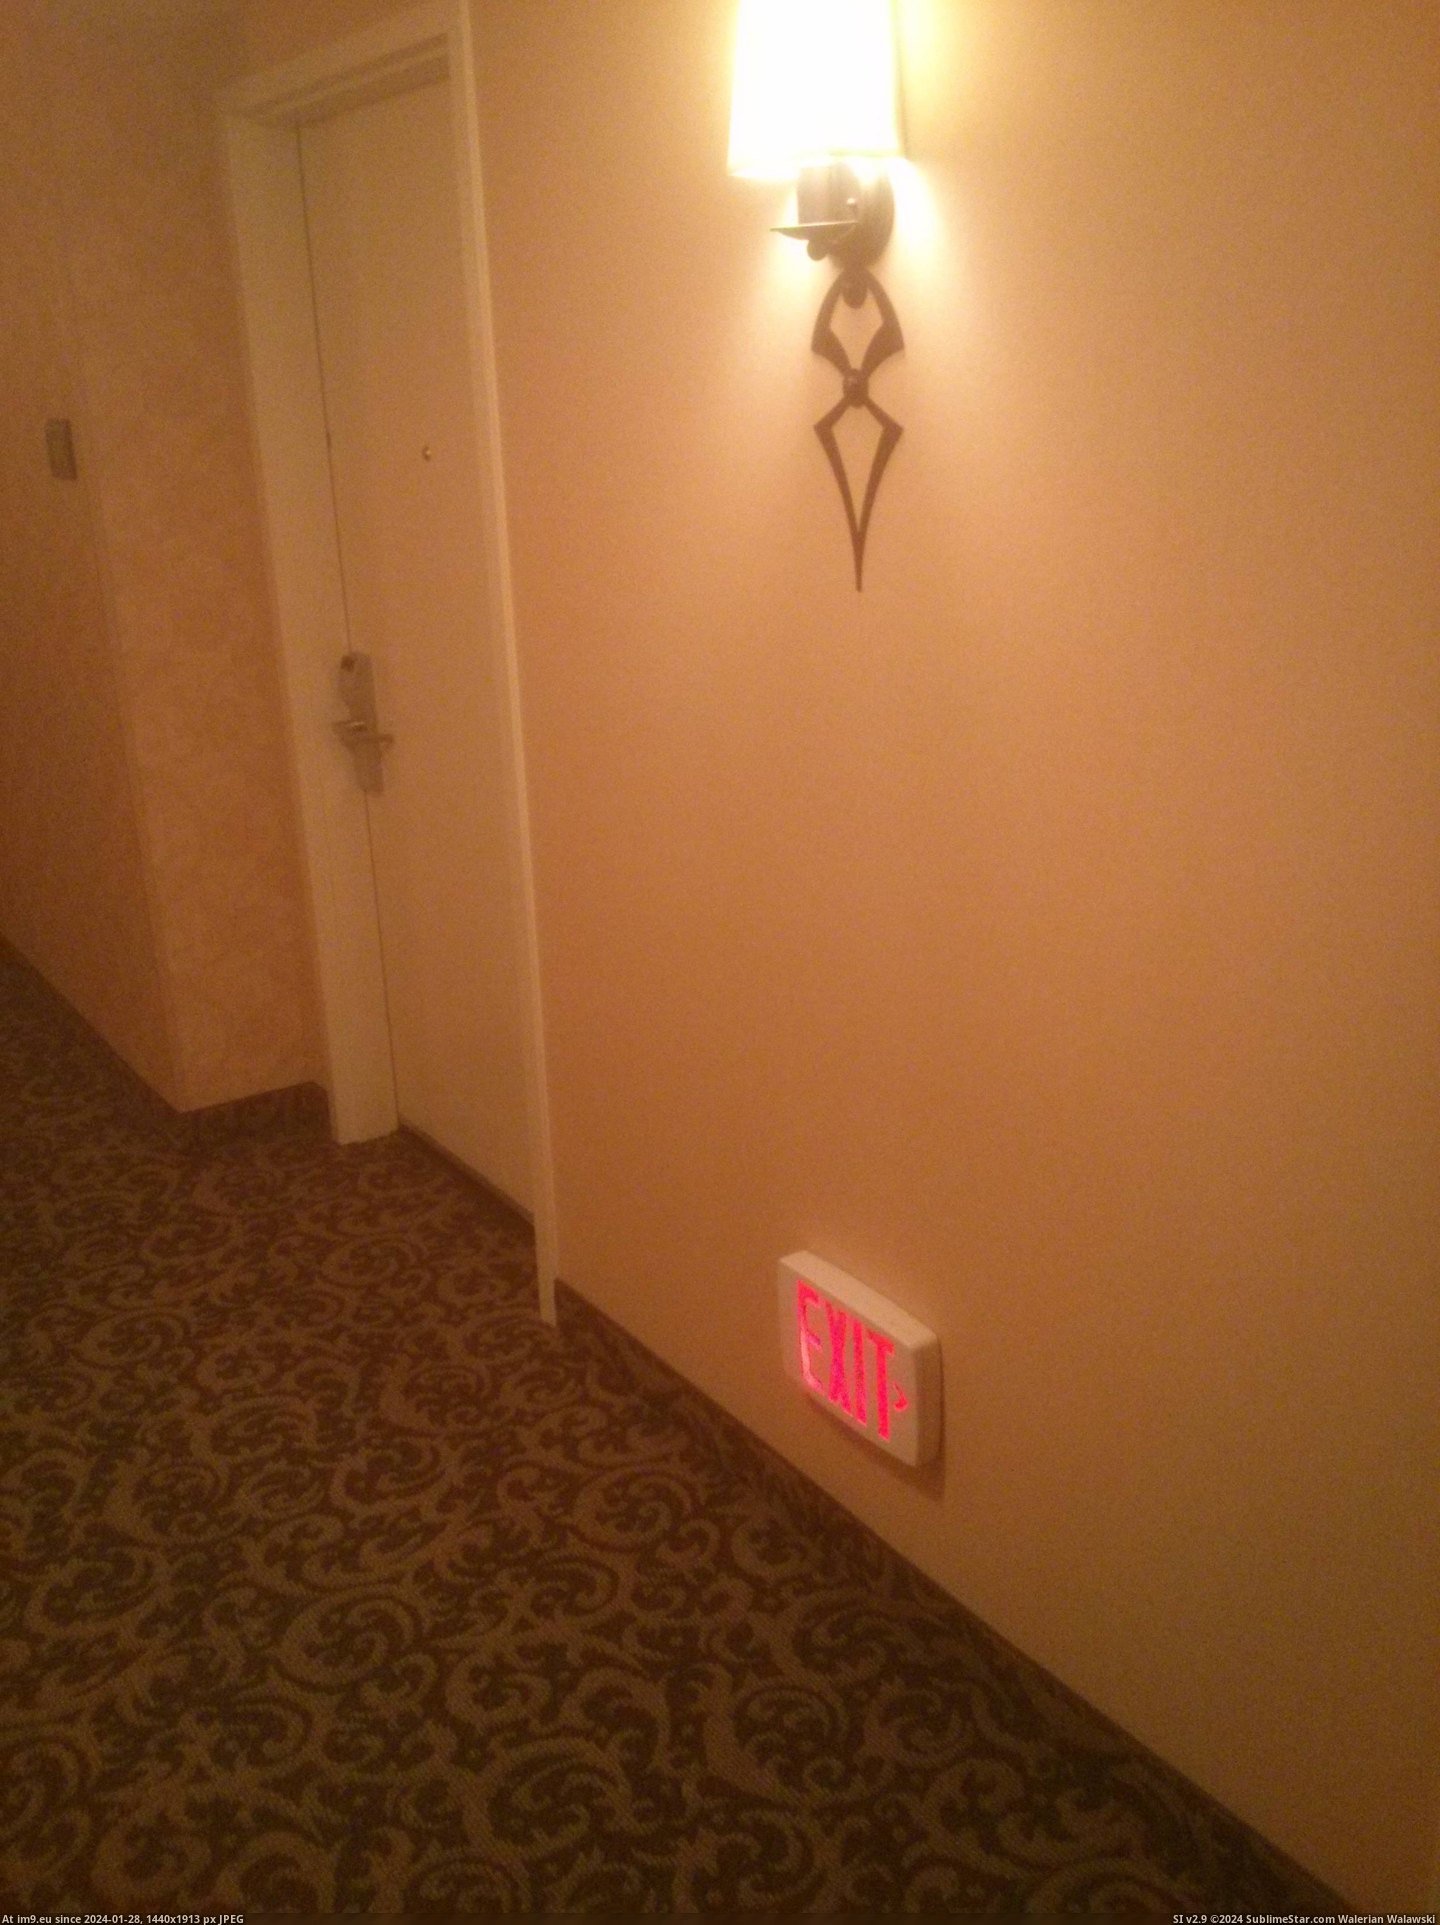 #Hotel #Hallway #Exit #Floor [Mildlyinteresting] Found an exit sign near the floor of a hotel hallway Pic. (Image of album My r/MILDLYINTERESTING favs))